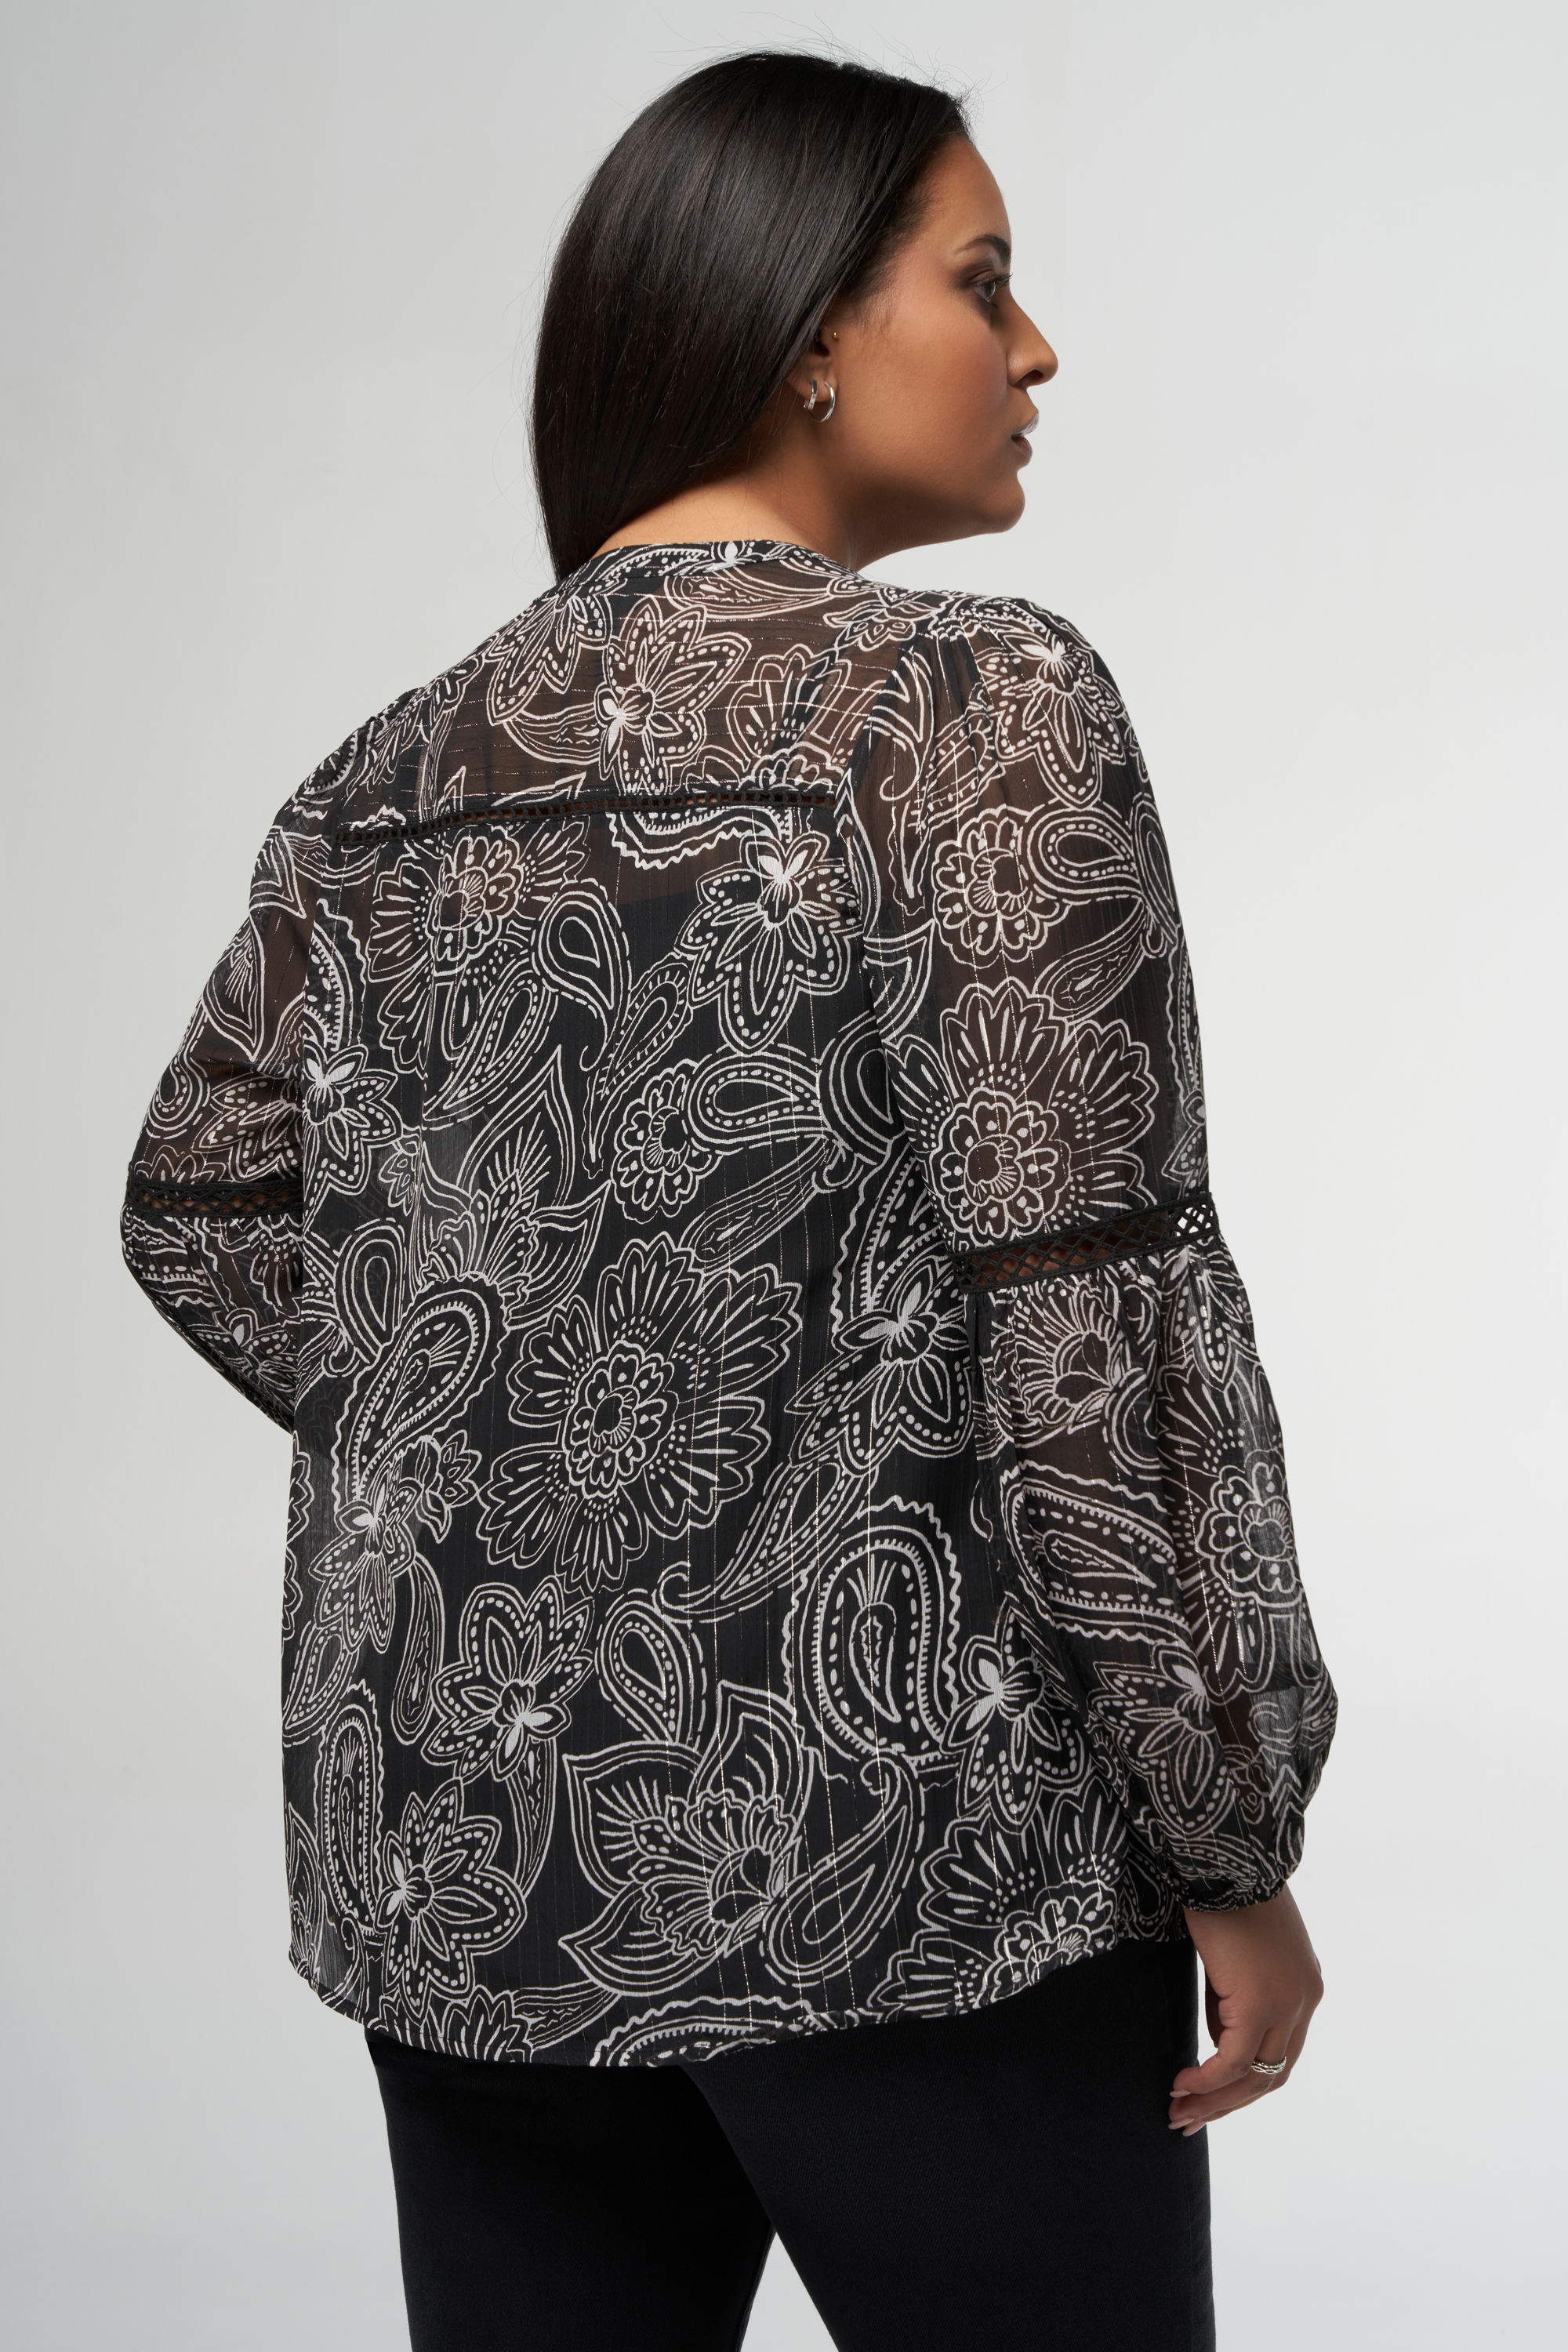 Mode | Multi mit Paisley-Print Bluse Damen schwarz-weiss MS